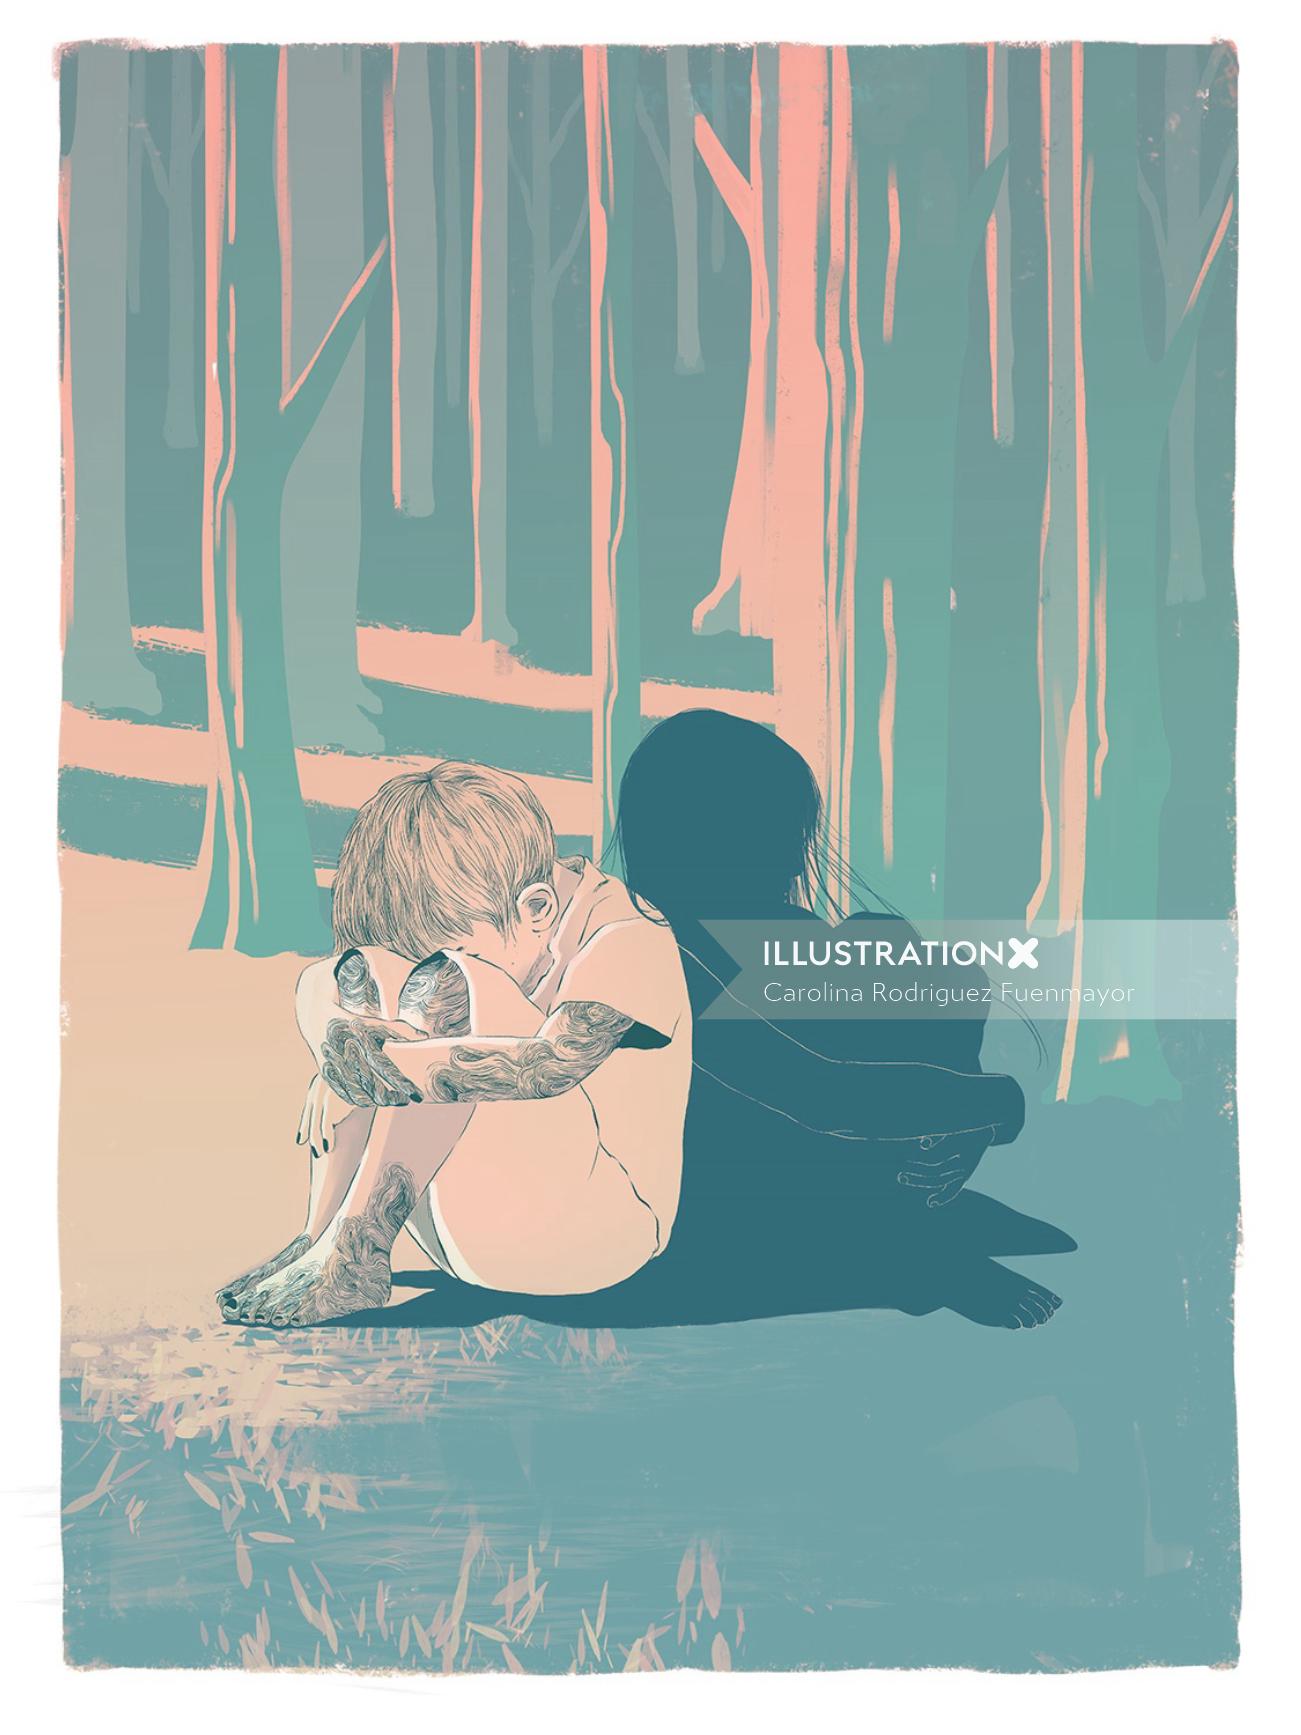 Illustration of lonely boy